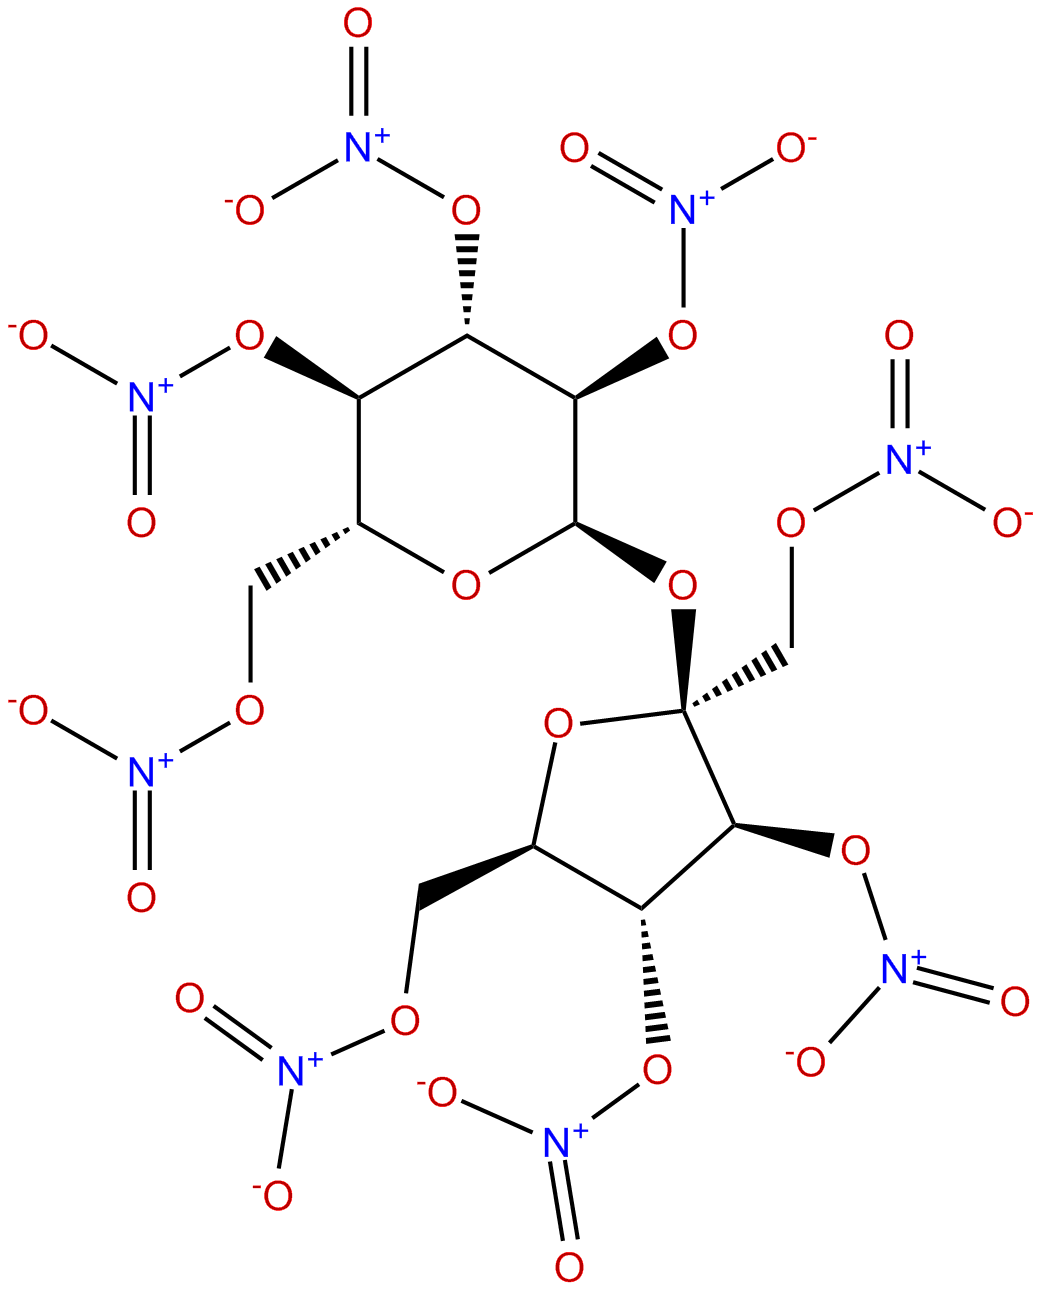 Image of sucrose octanitrate